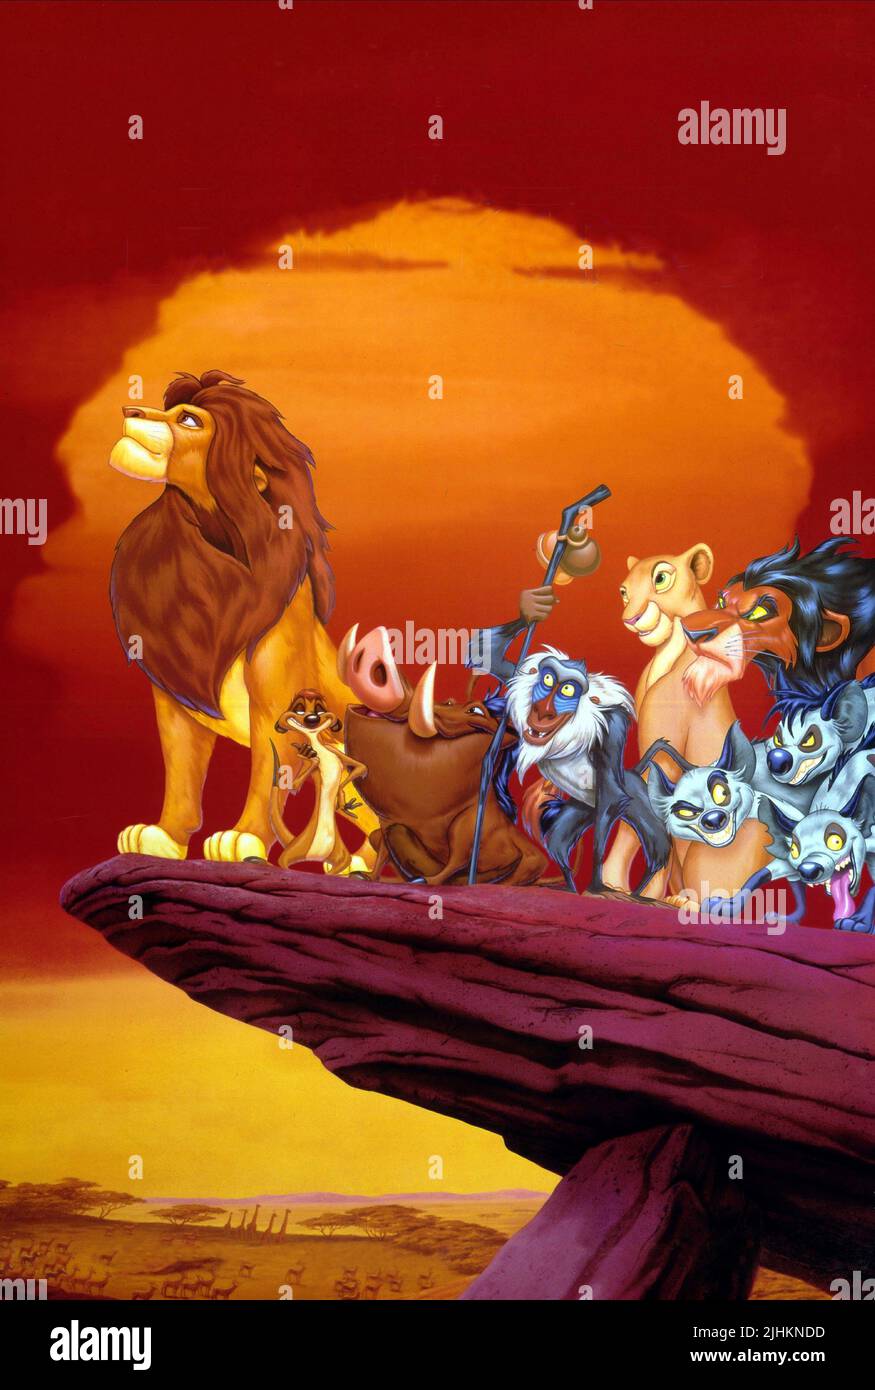 SIMBA,TIMON,PUMBAA,RAFIKI, RAFIKI,NALA,SCAR, THE LION KING, 1994 Stock Photo